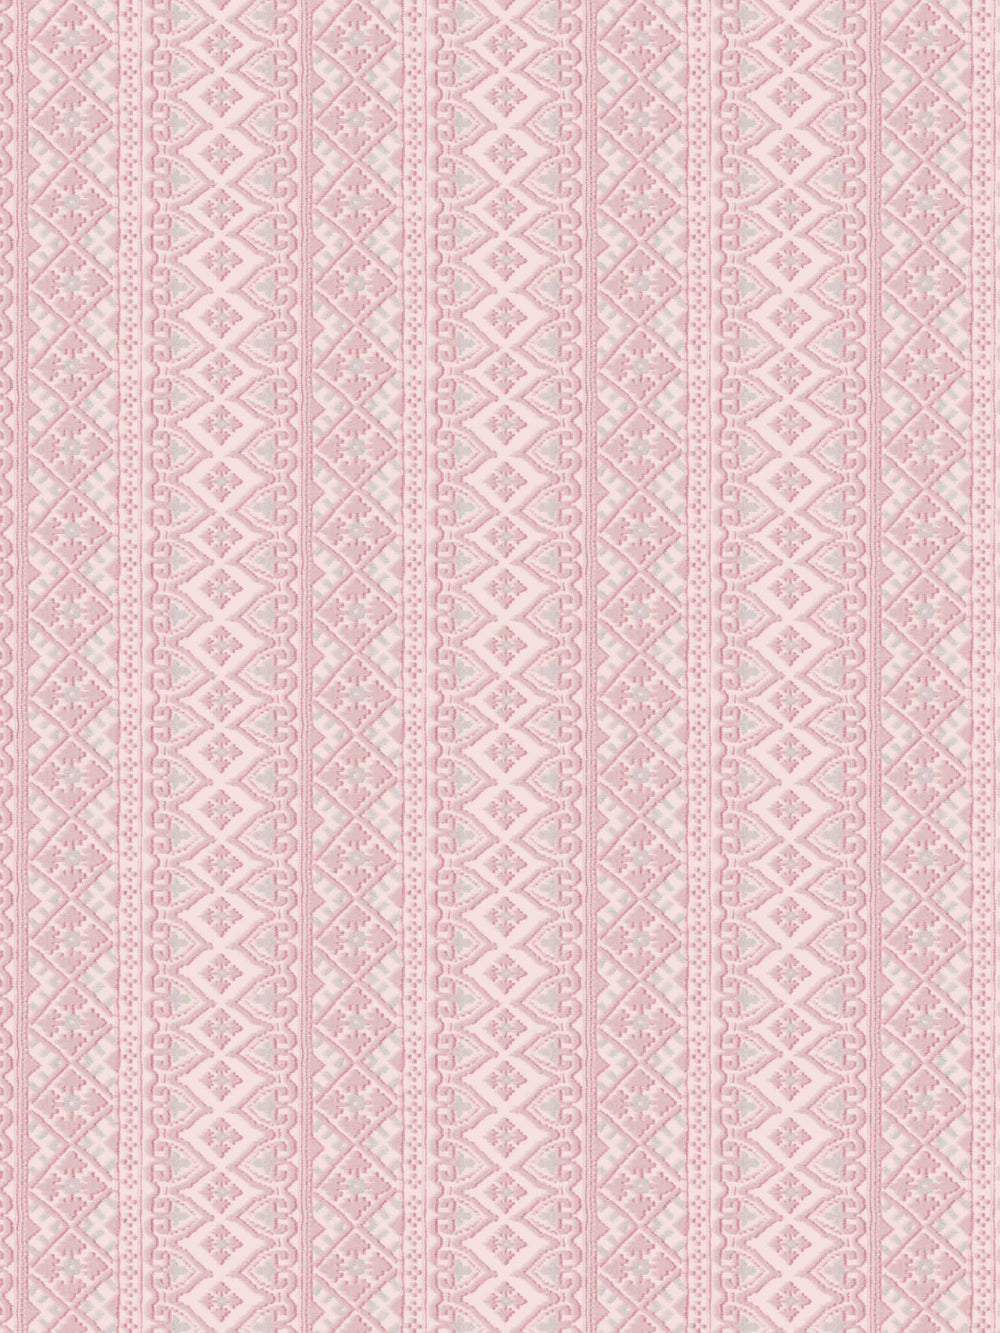 Taklamakan Wallpaper - Berry Pink